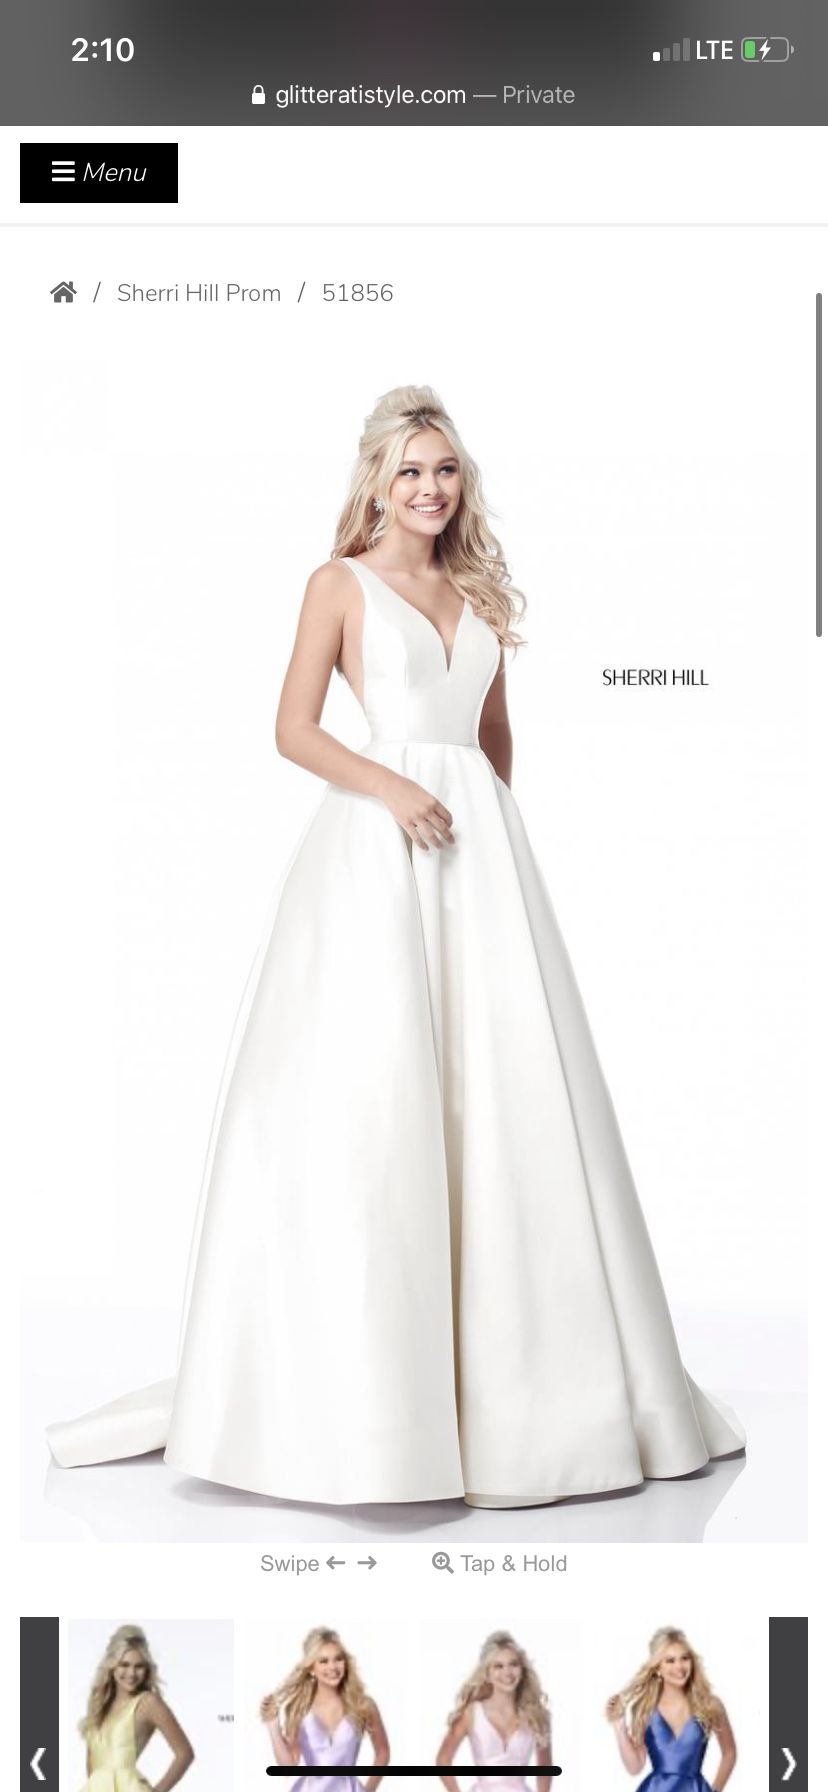 White prom dress